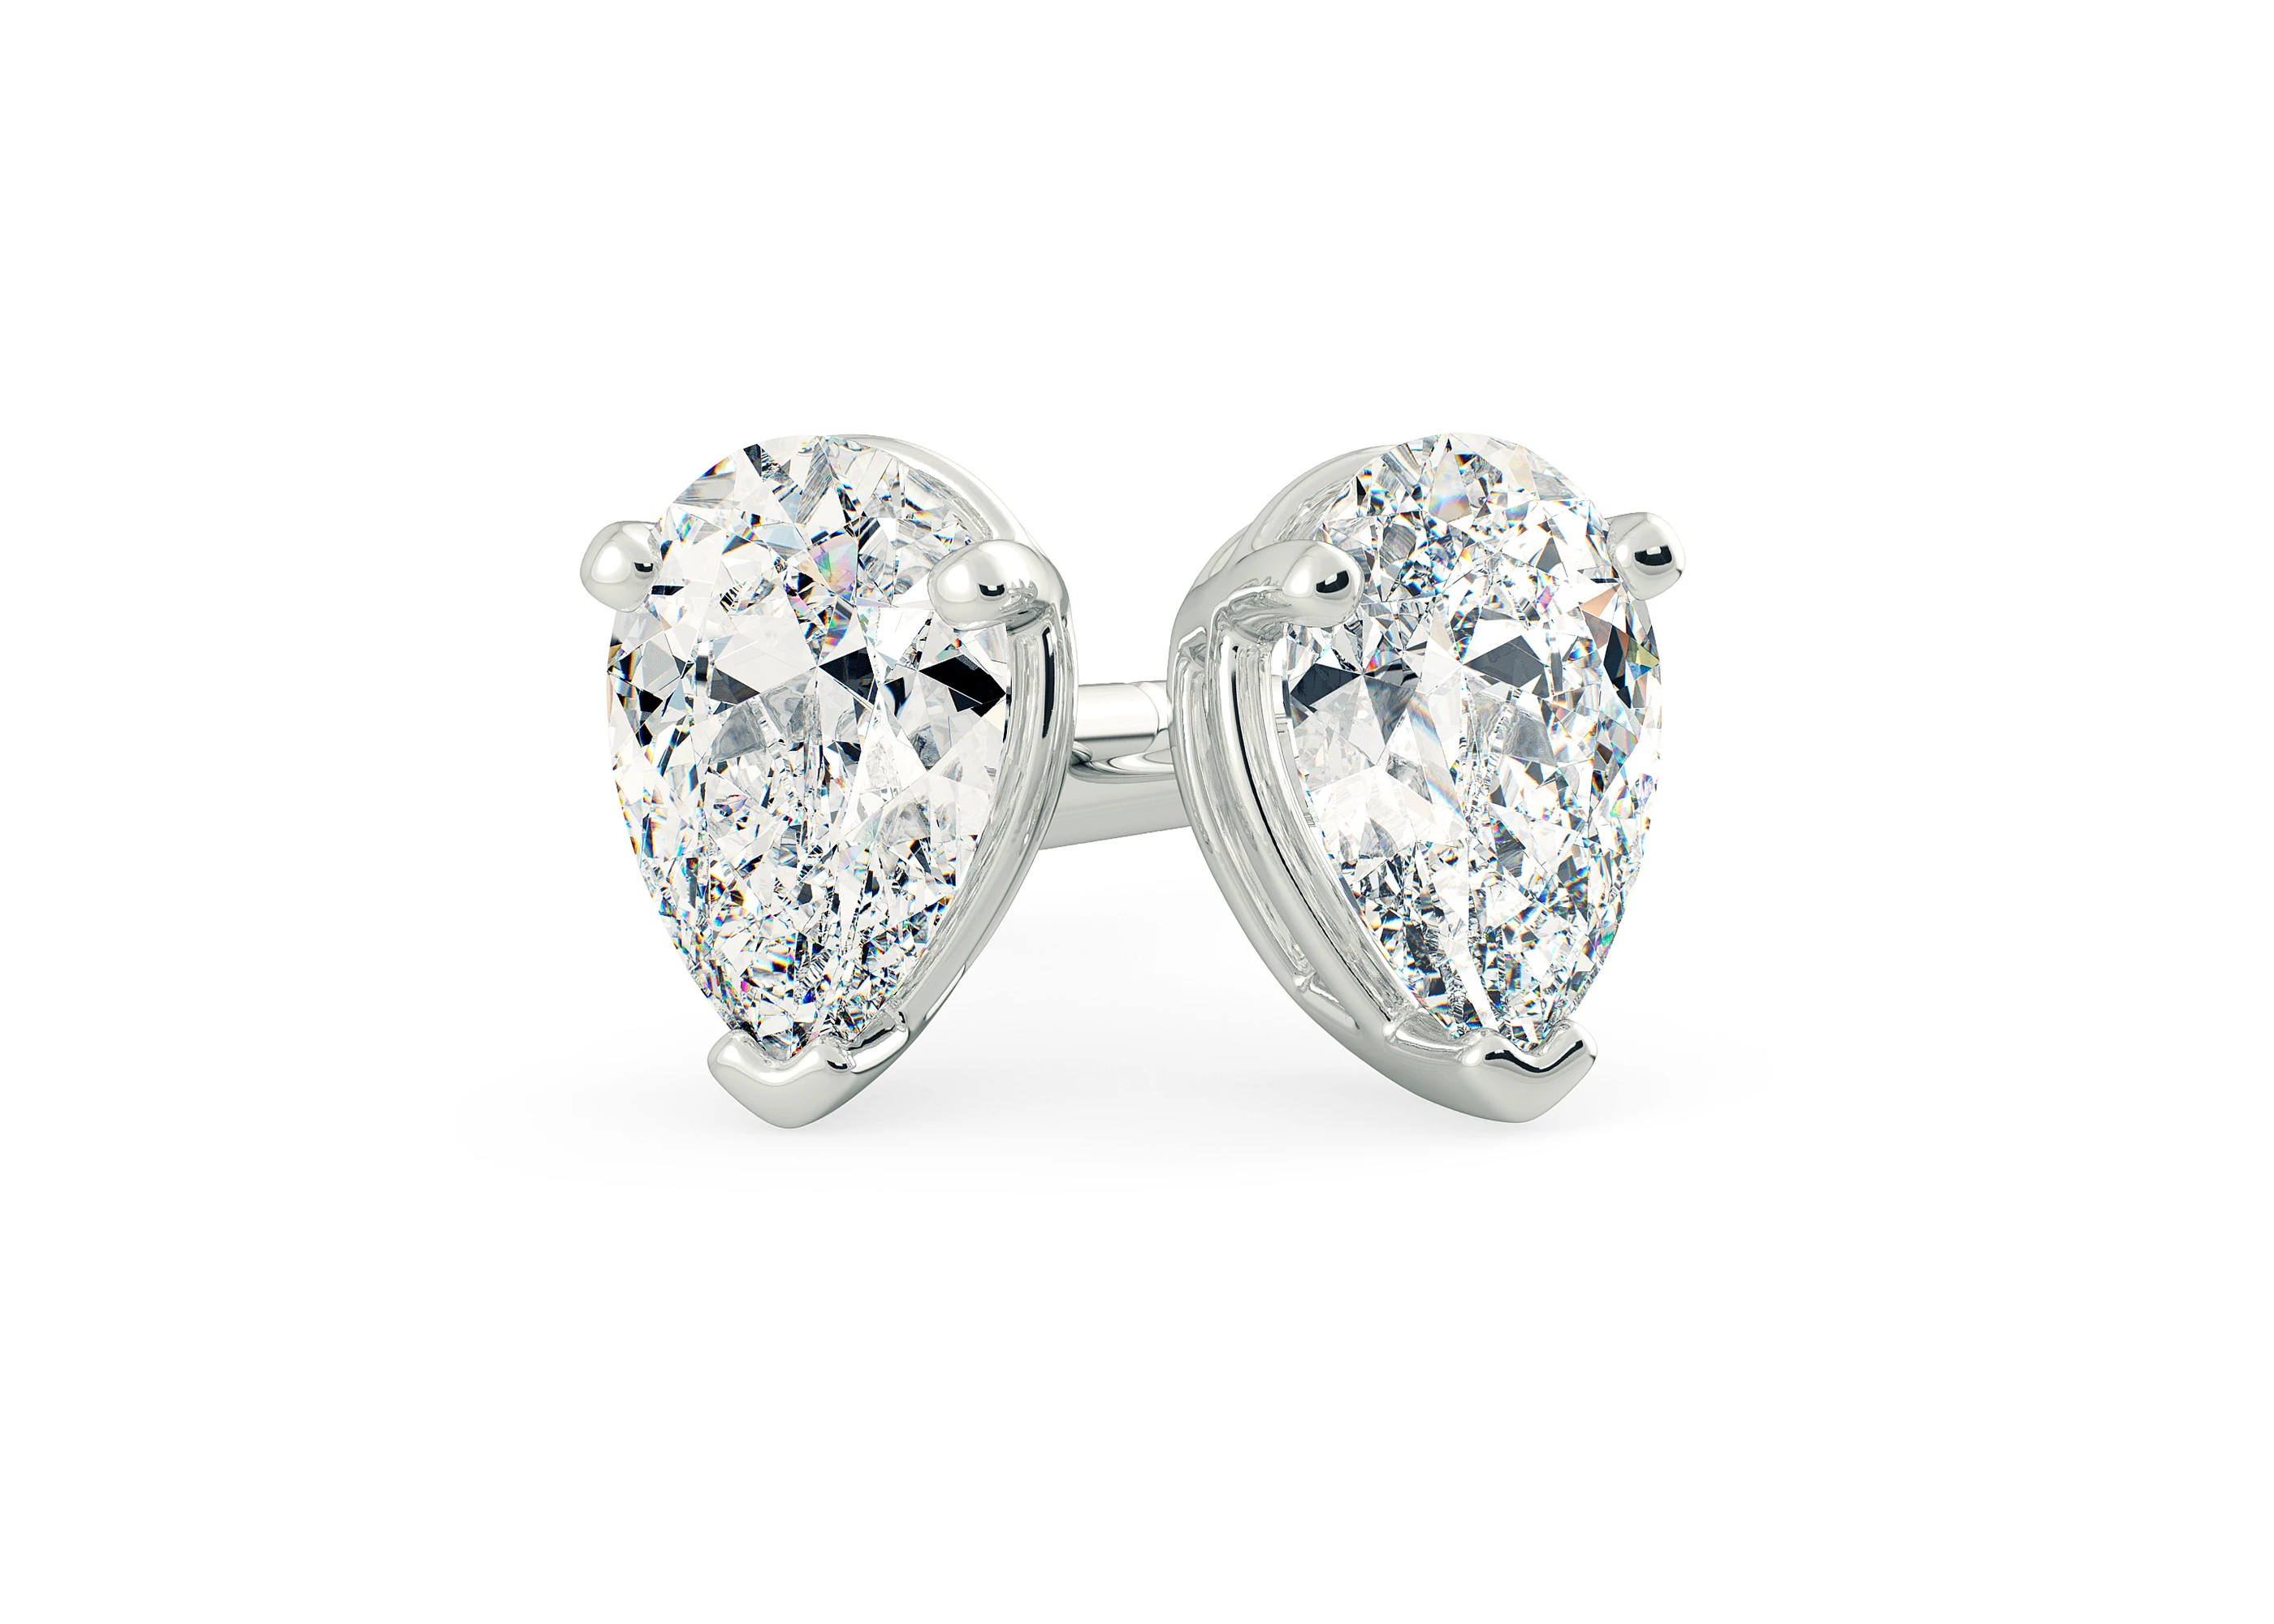 Ettore Pear Diamond Stud Earrings in Platinum with Butterfly Backs